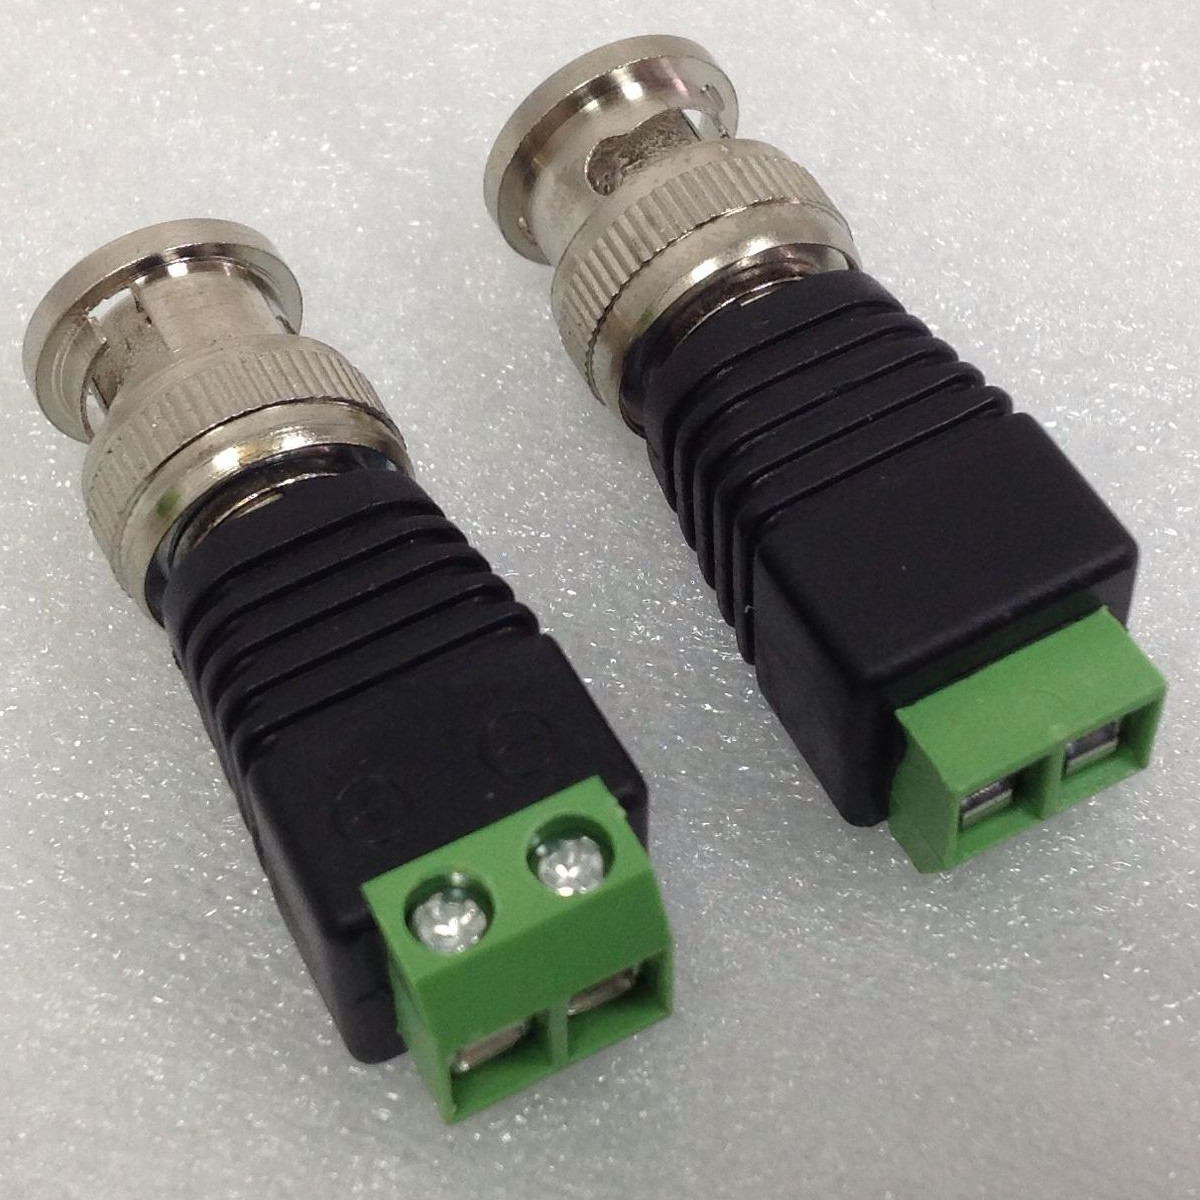 coax cable splice connectors